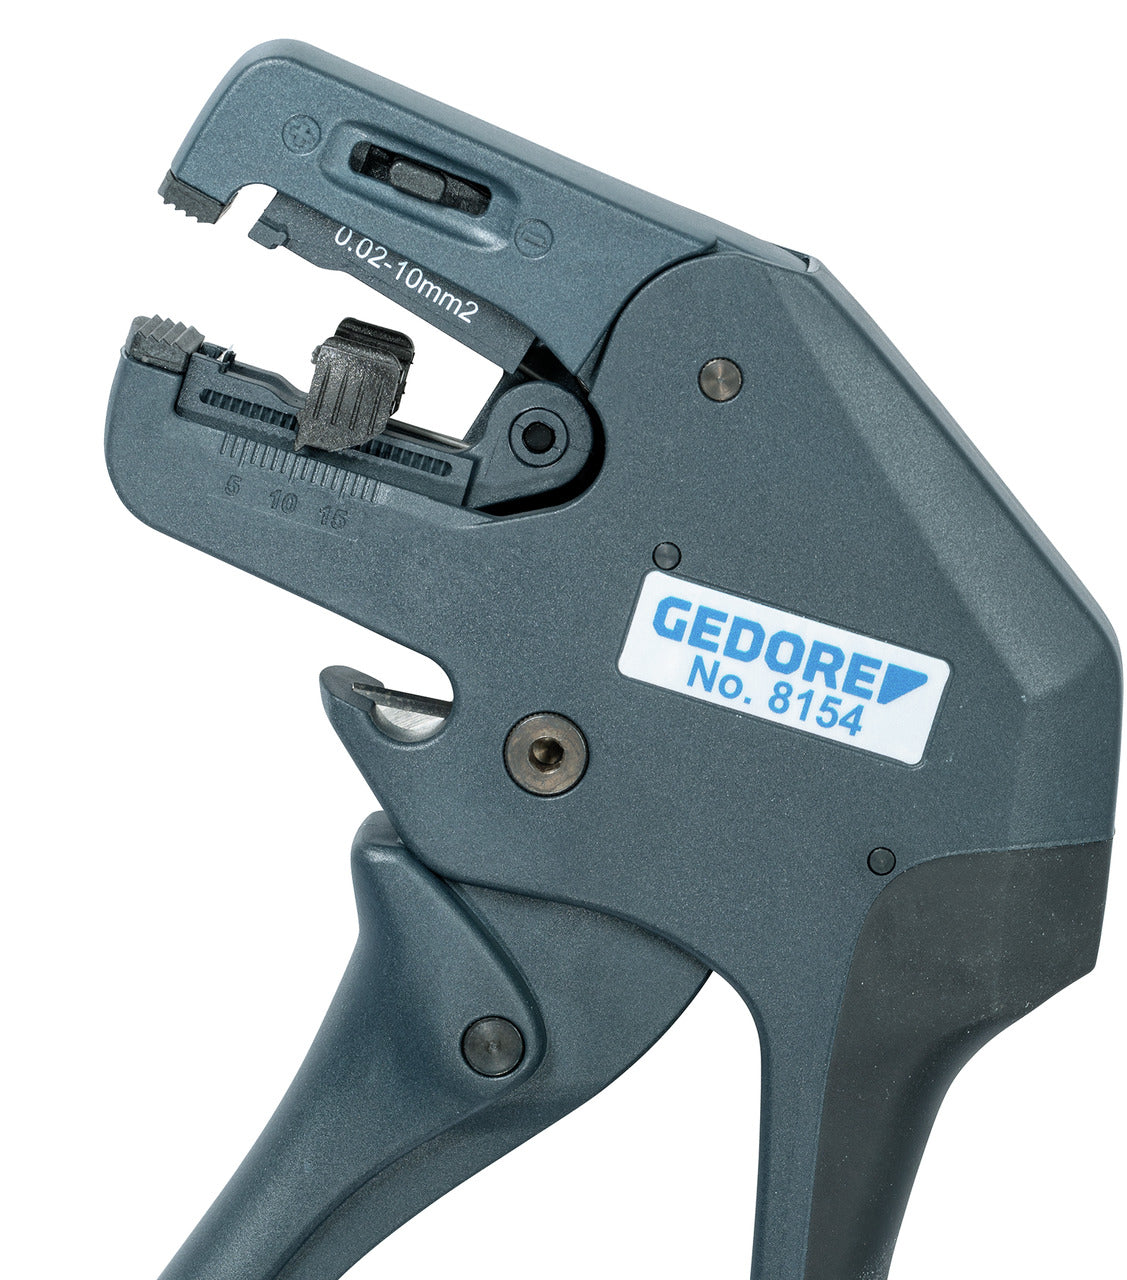 GEDORE 8154 - StrippMax-Pistol Professional Stripping Pliers (3416453)